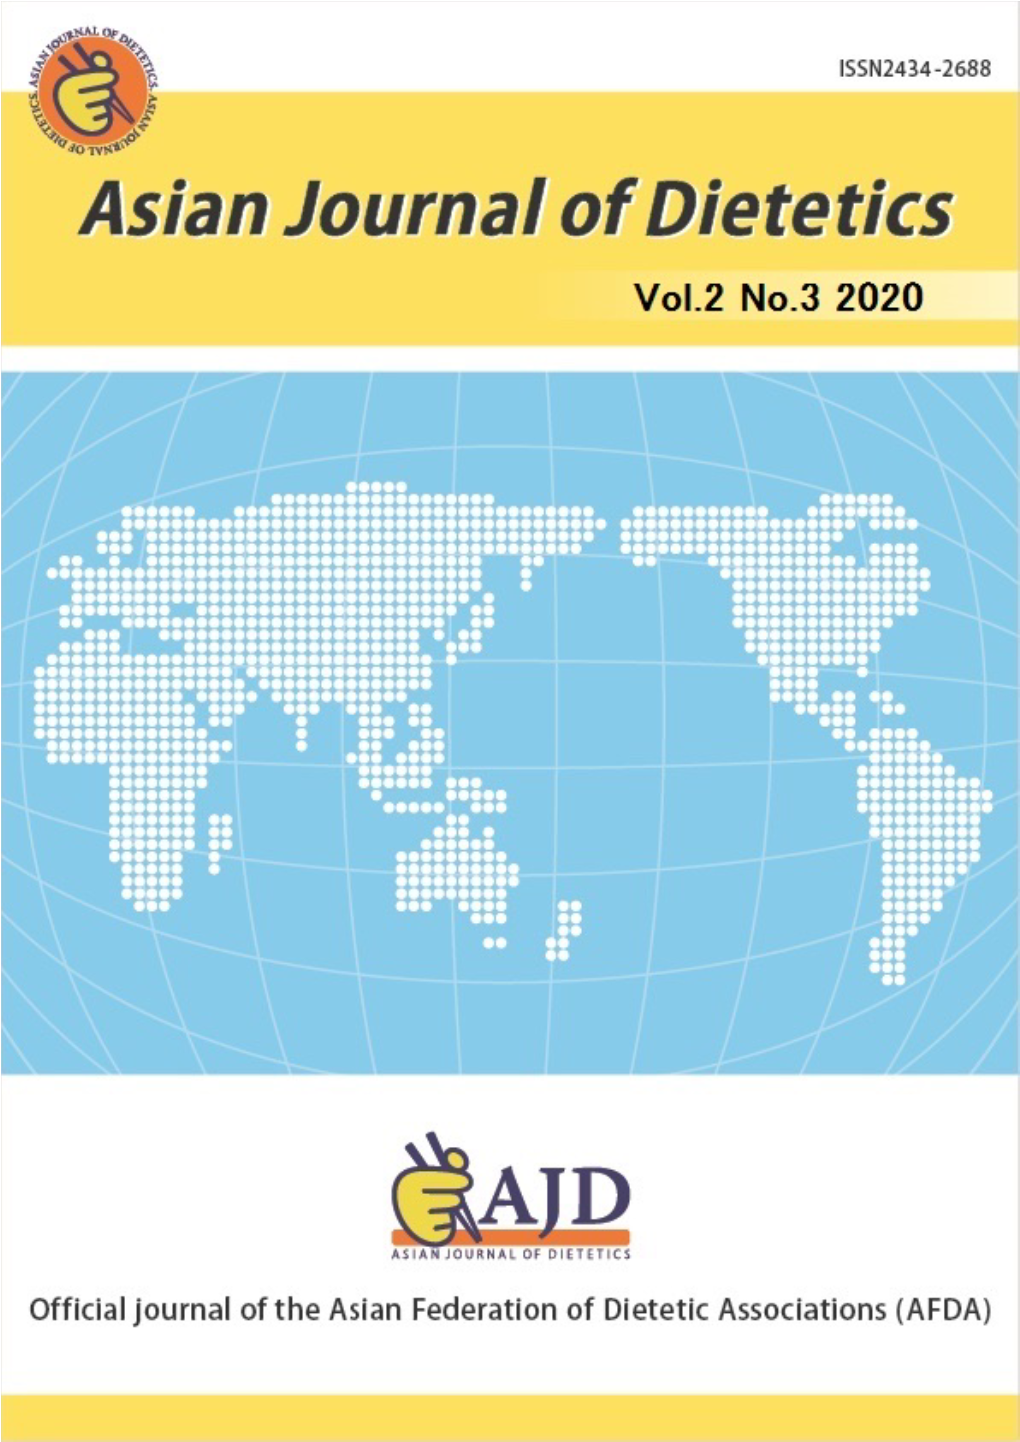 Asian Journal of Dietetics Vol.2 No.3, 2020